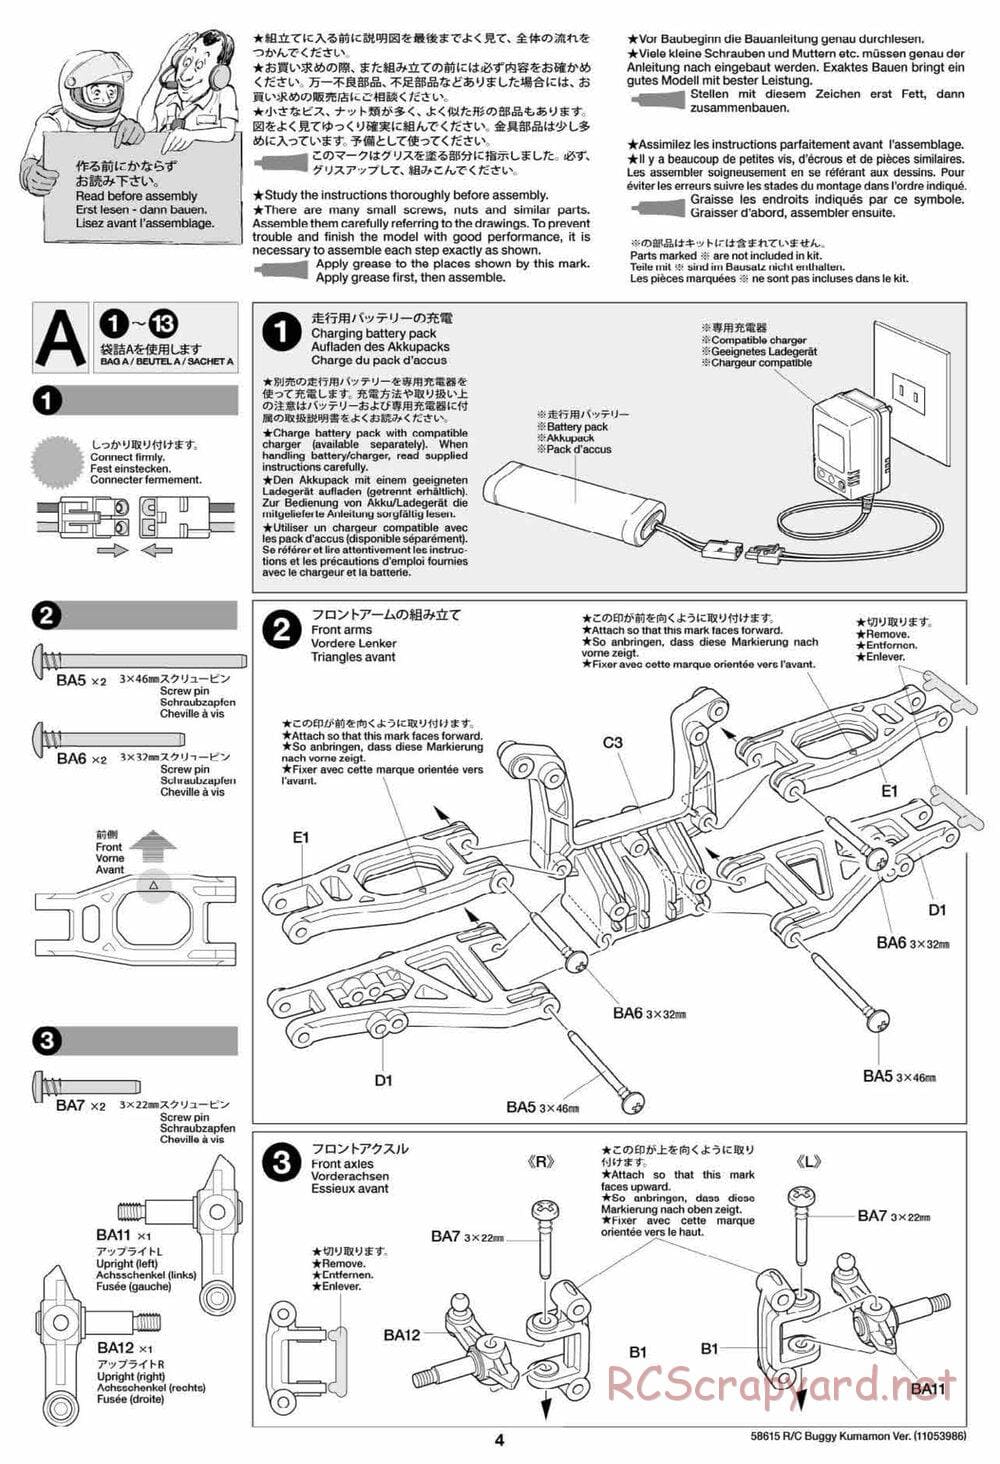 Tamiya - Buggy Kumamon Version Chassis - Manual - Page 4